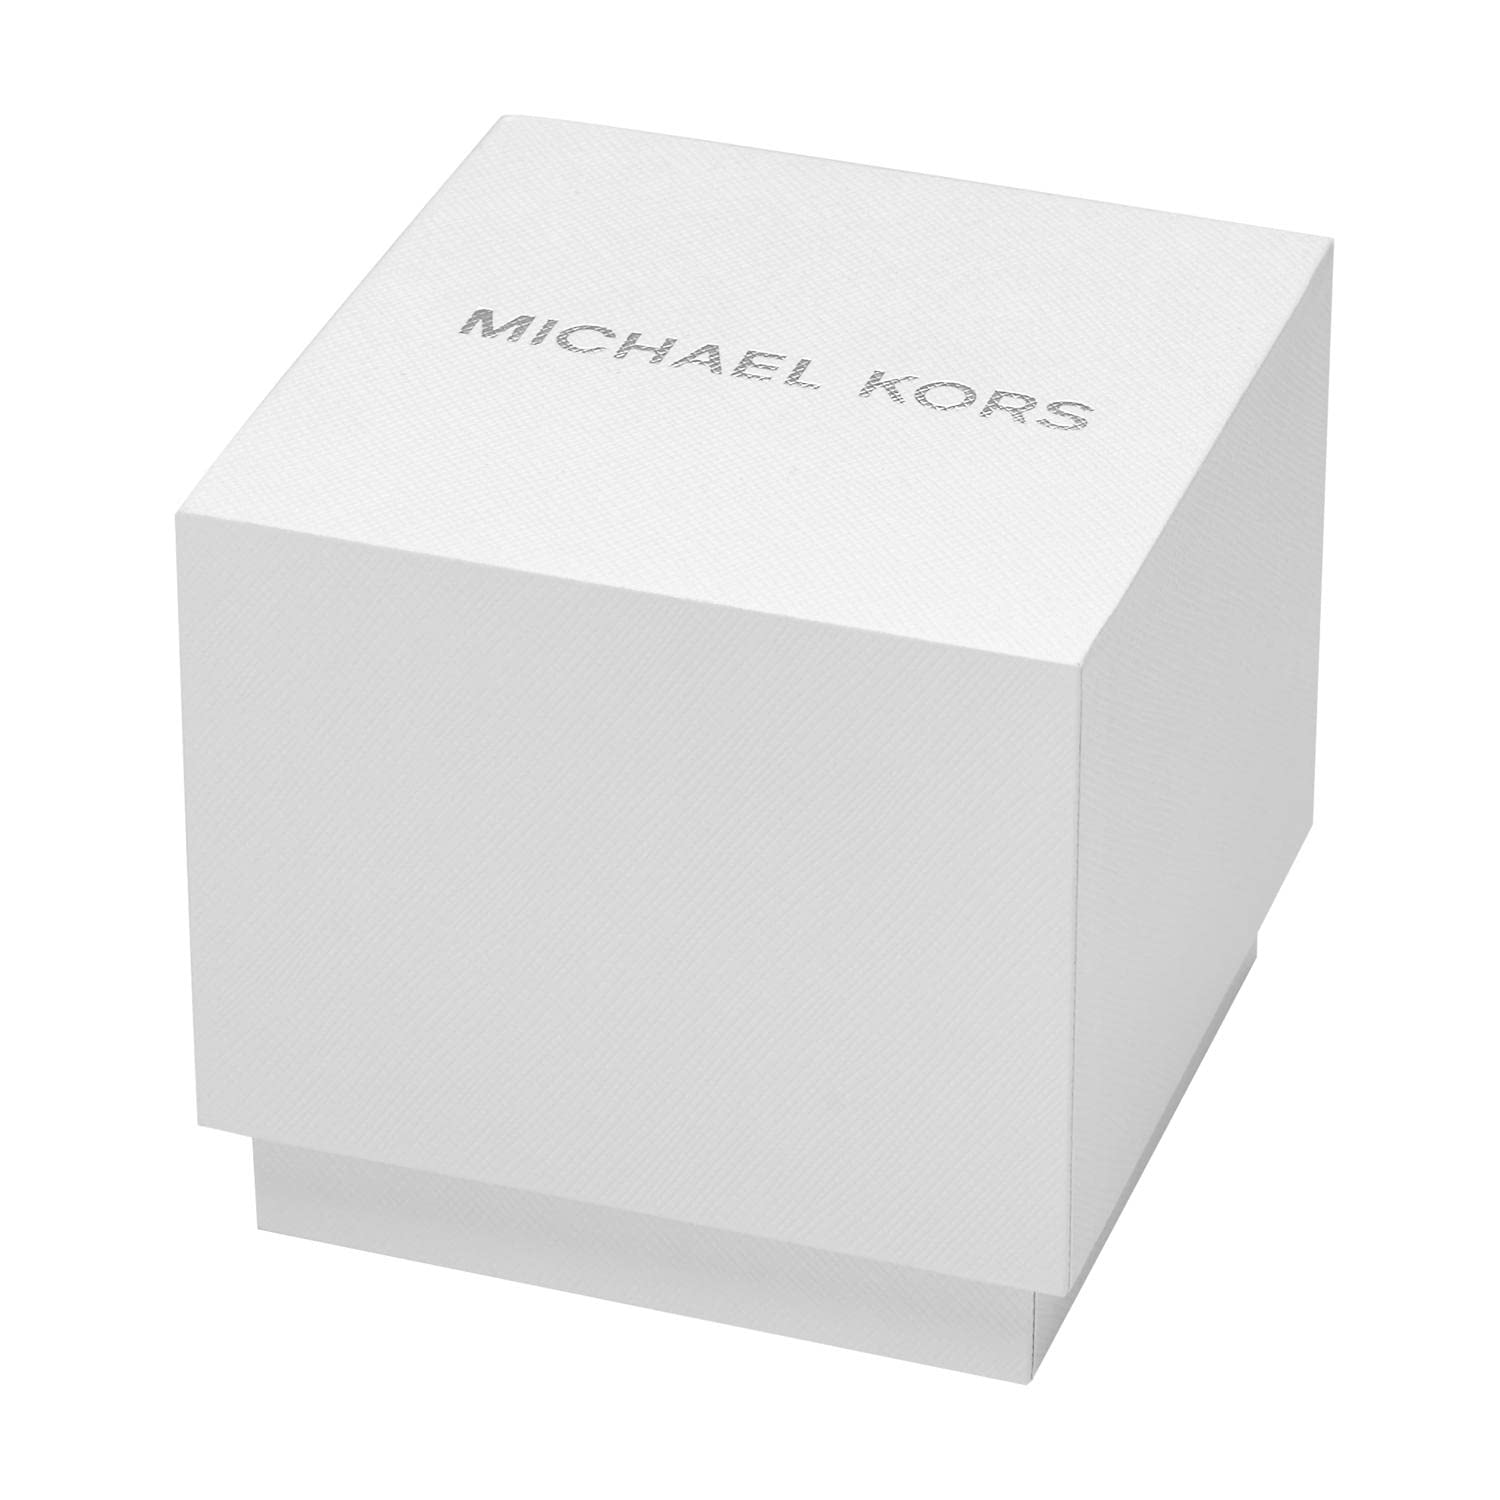 Michael Kors Iconic Reissue Runway Chronograph Watch, 38mm